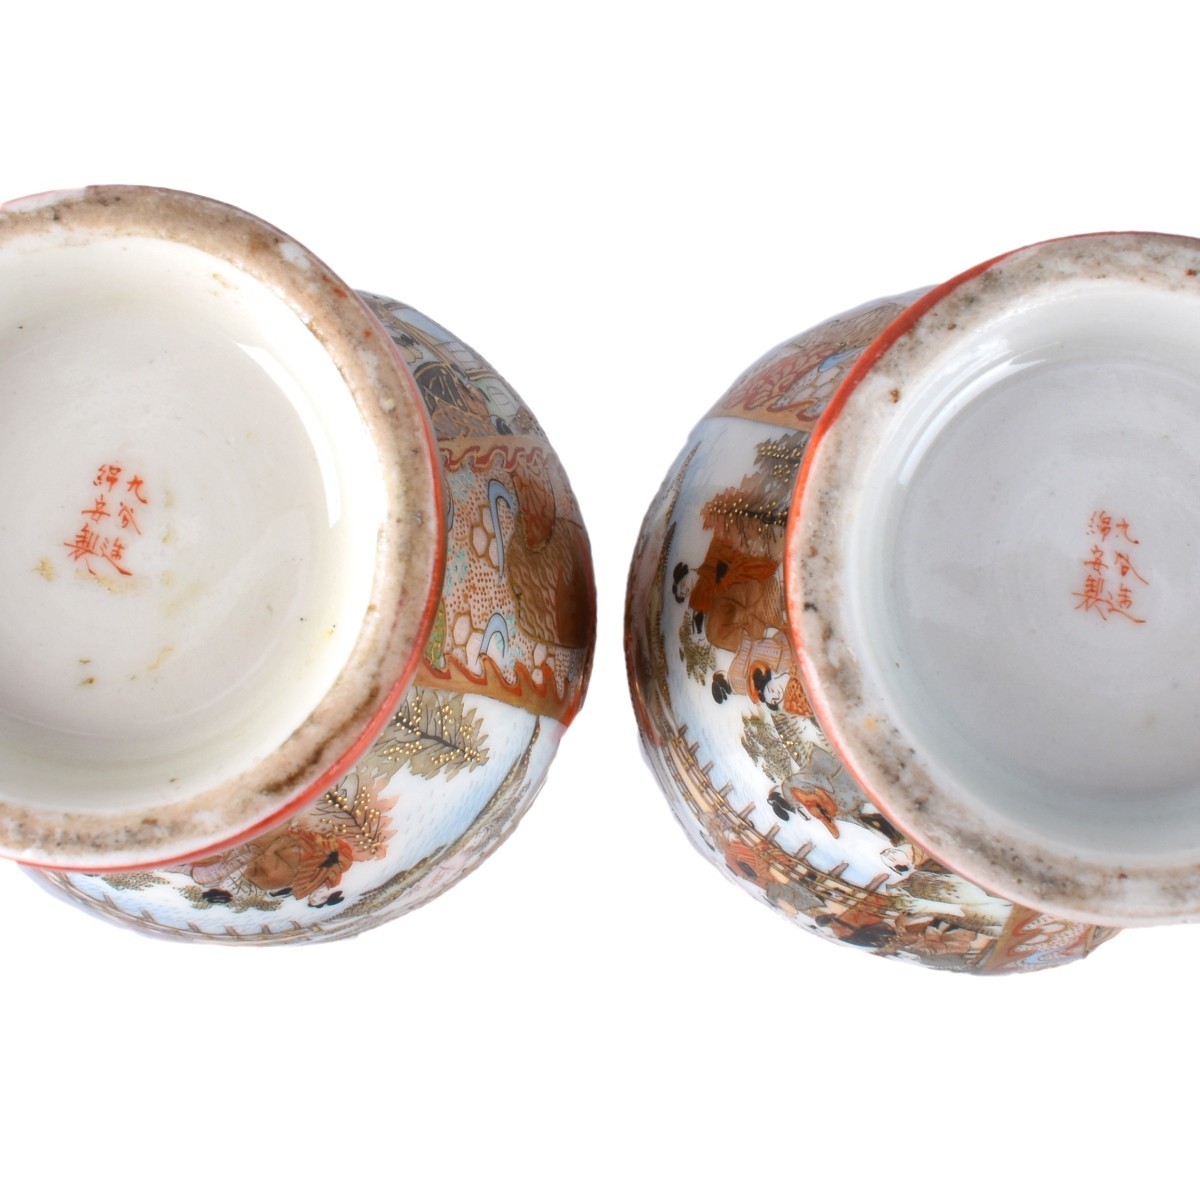 Pair of Japanese Miniature Vases